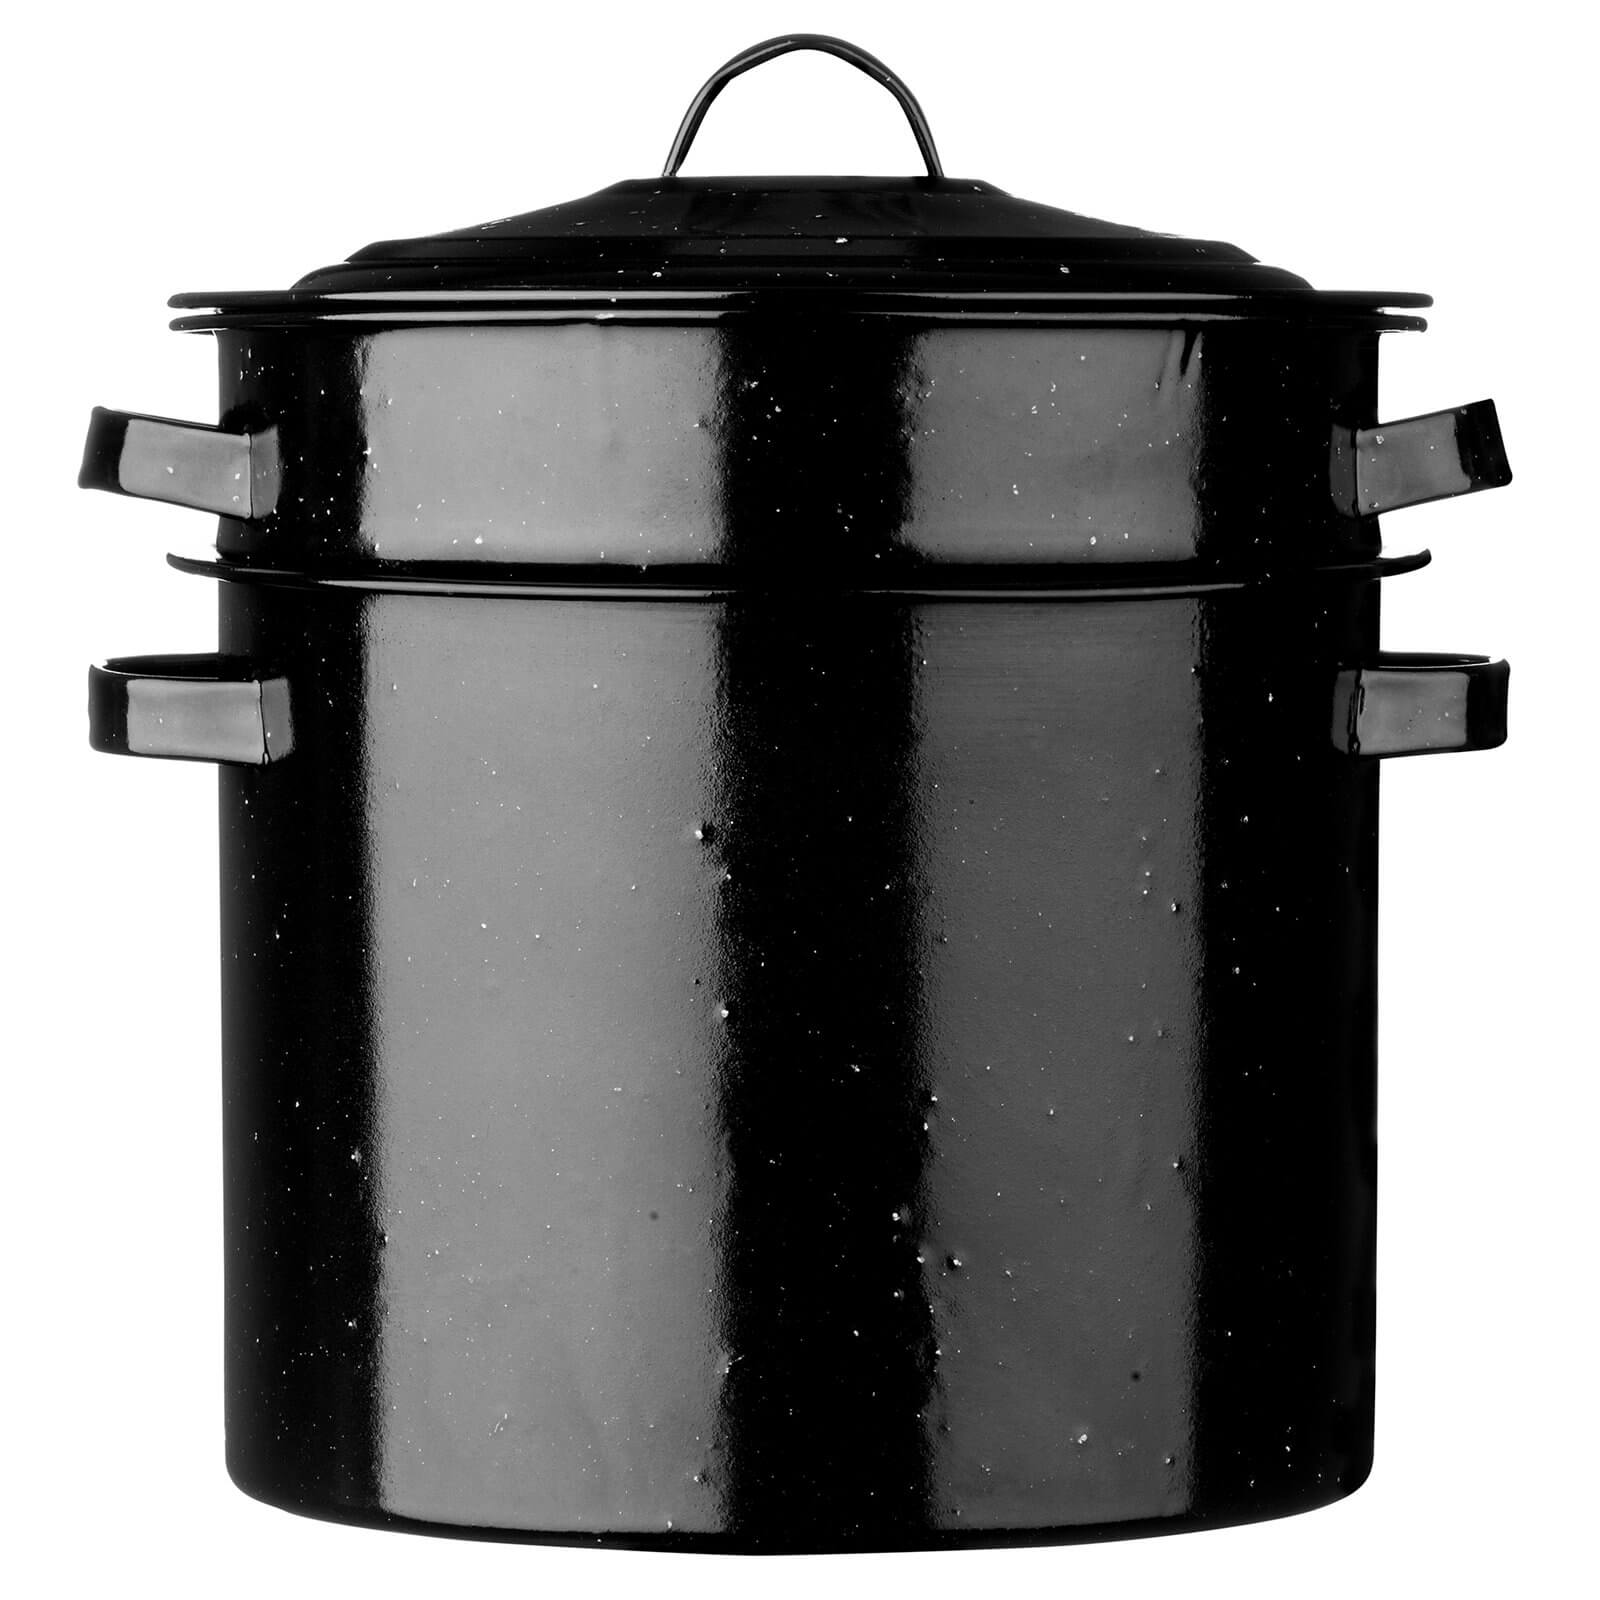 Photo of Pasta Pot - Black Speckled Enamel